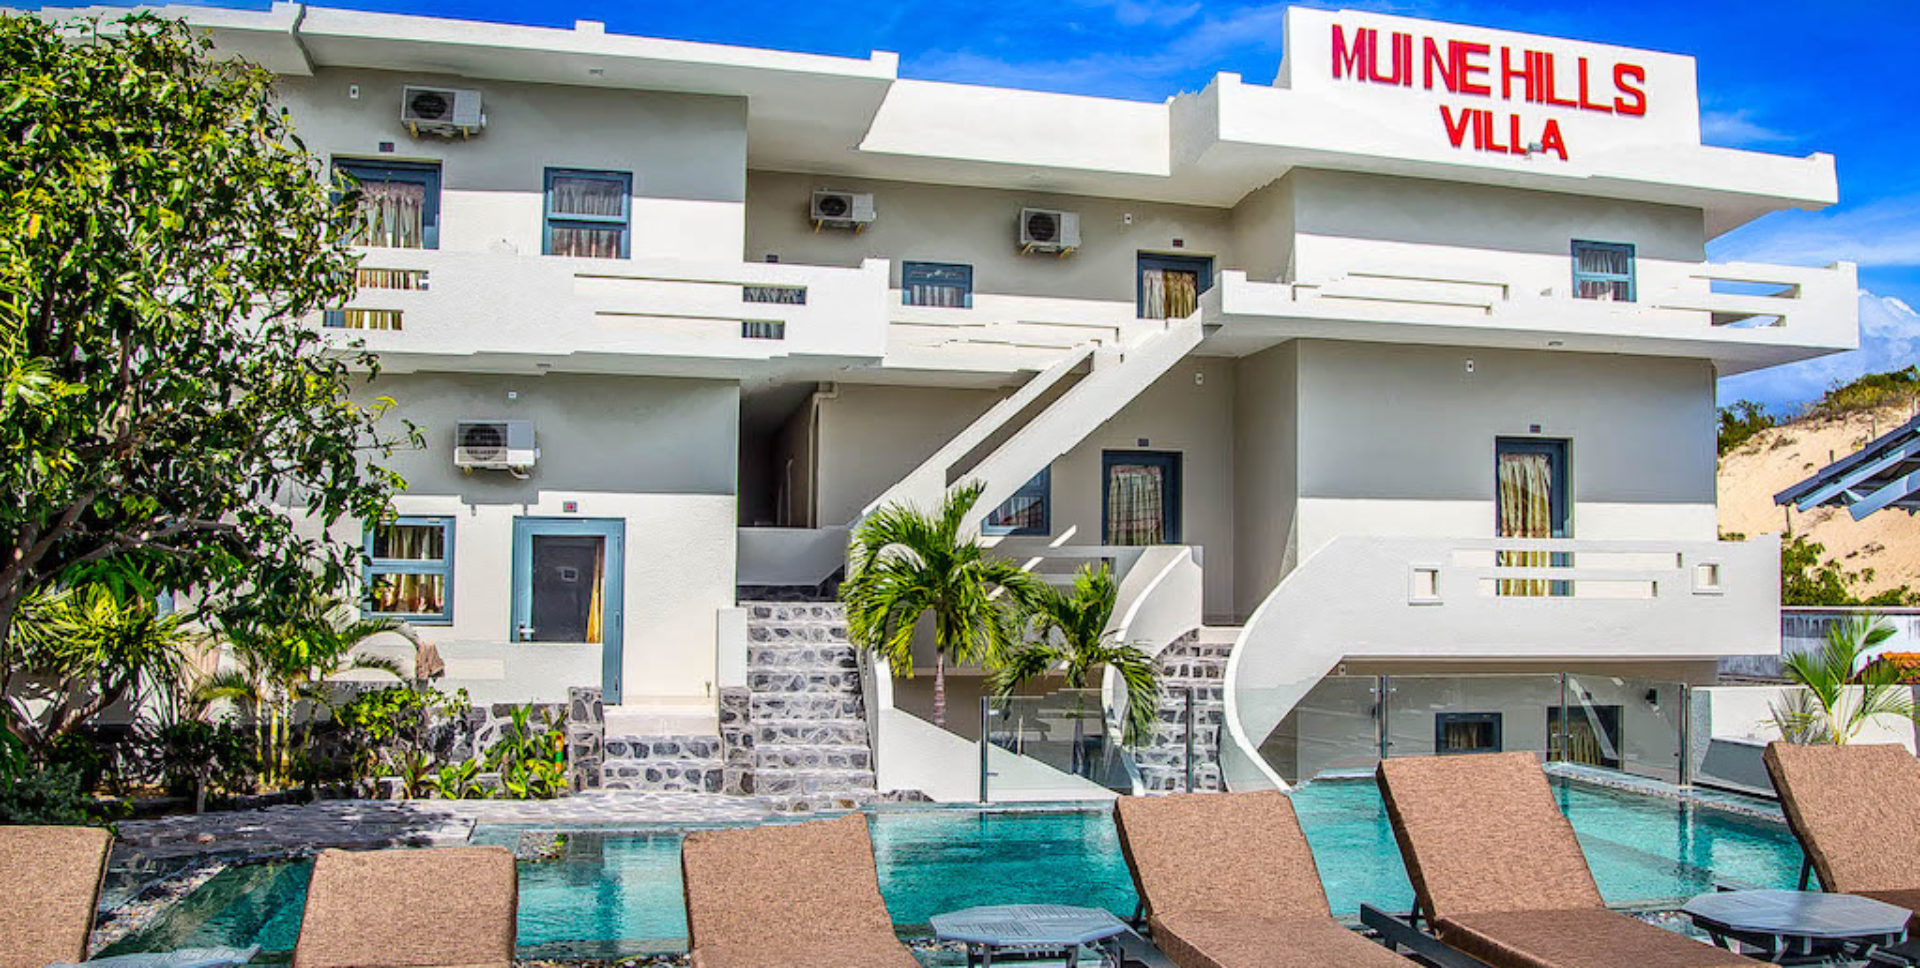 Mui Ne hills – The Best Hotel and Hostel Group in Mui Ne